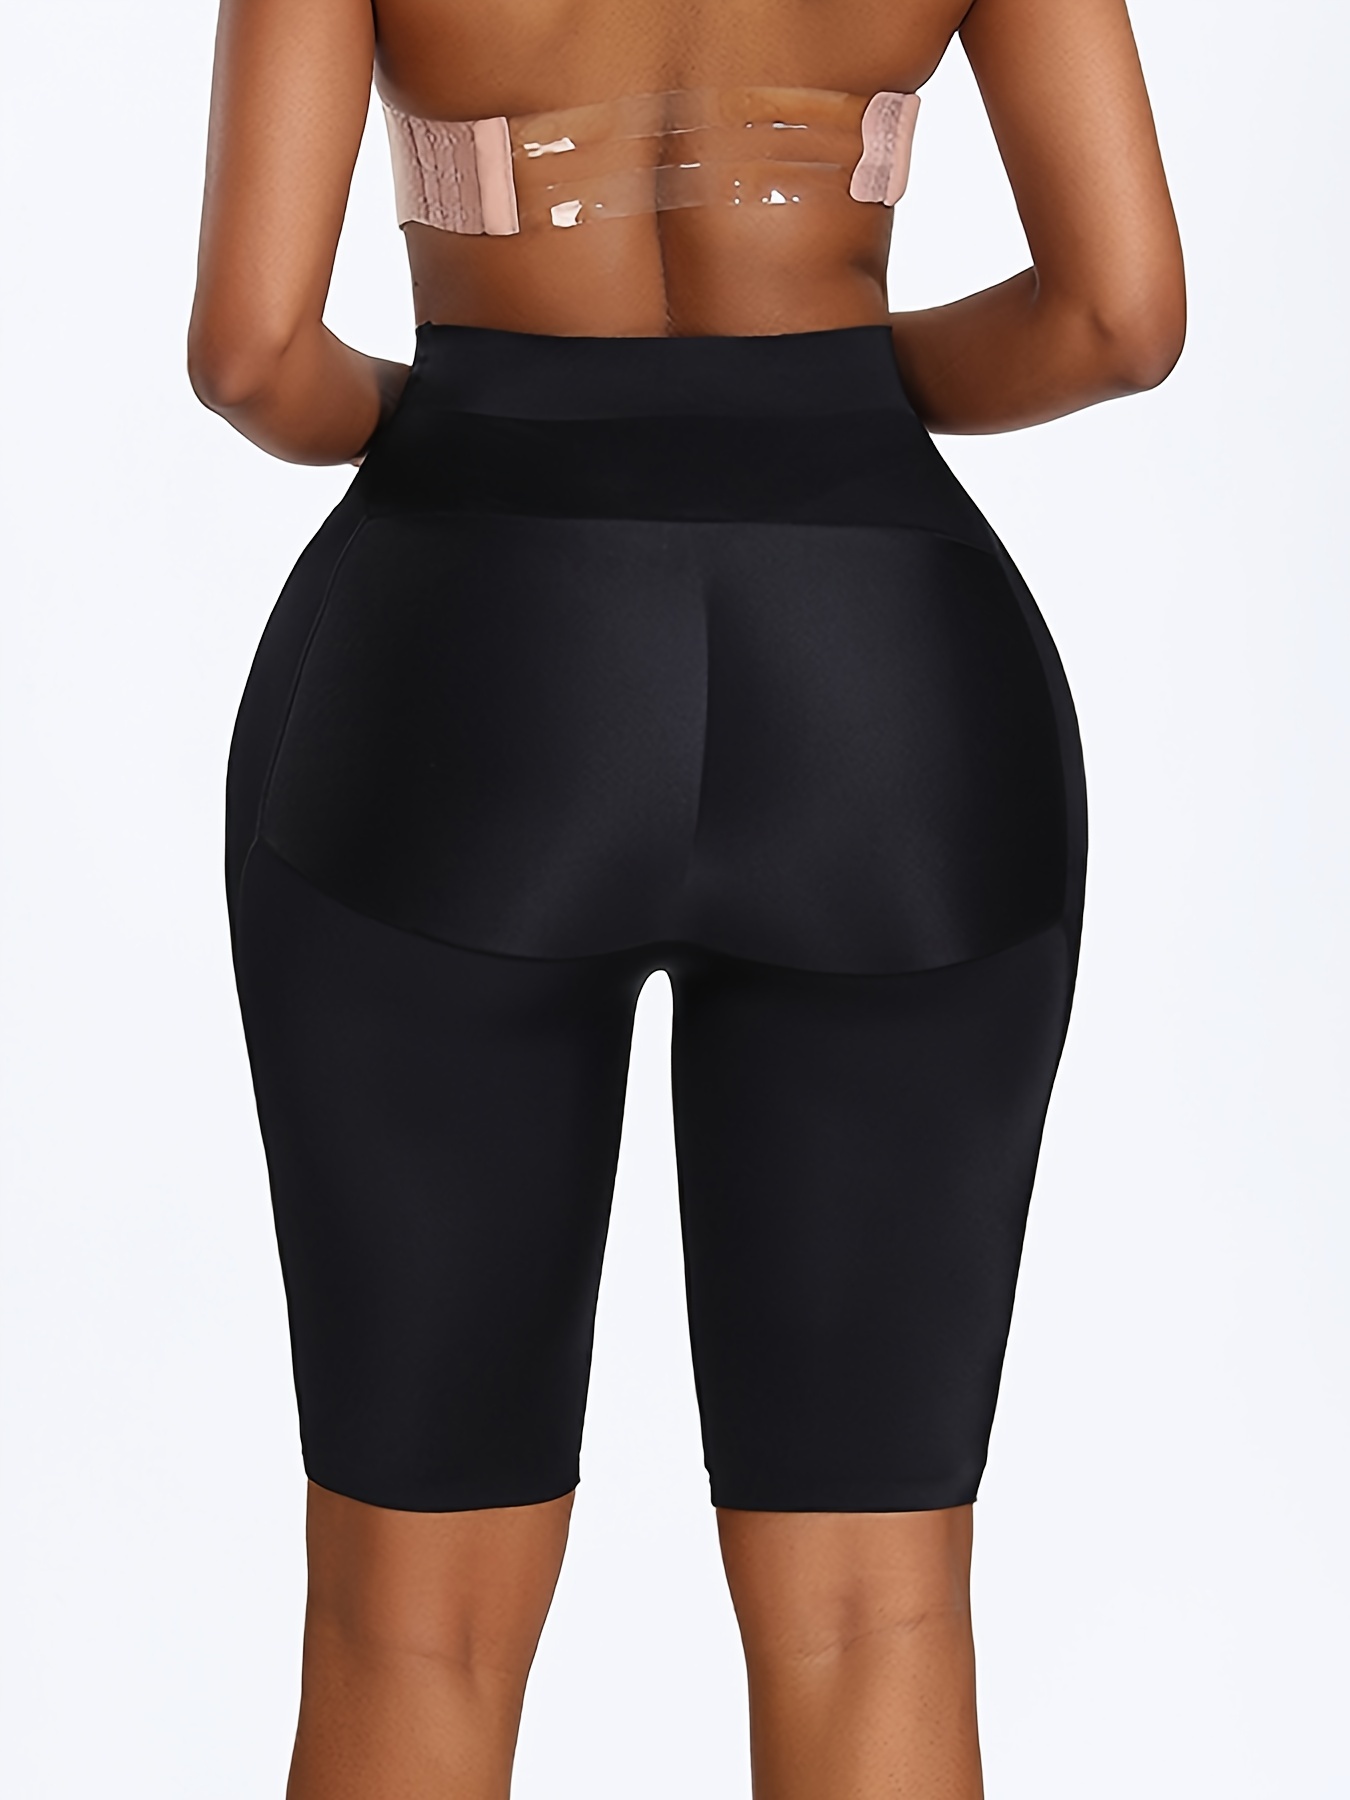 Women Tummy Control Panties Slimming Underwear Hip Lift Body Shaper Safety  Slip Shorts Under Skirt Anti Chafing Boxer S-3XL